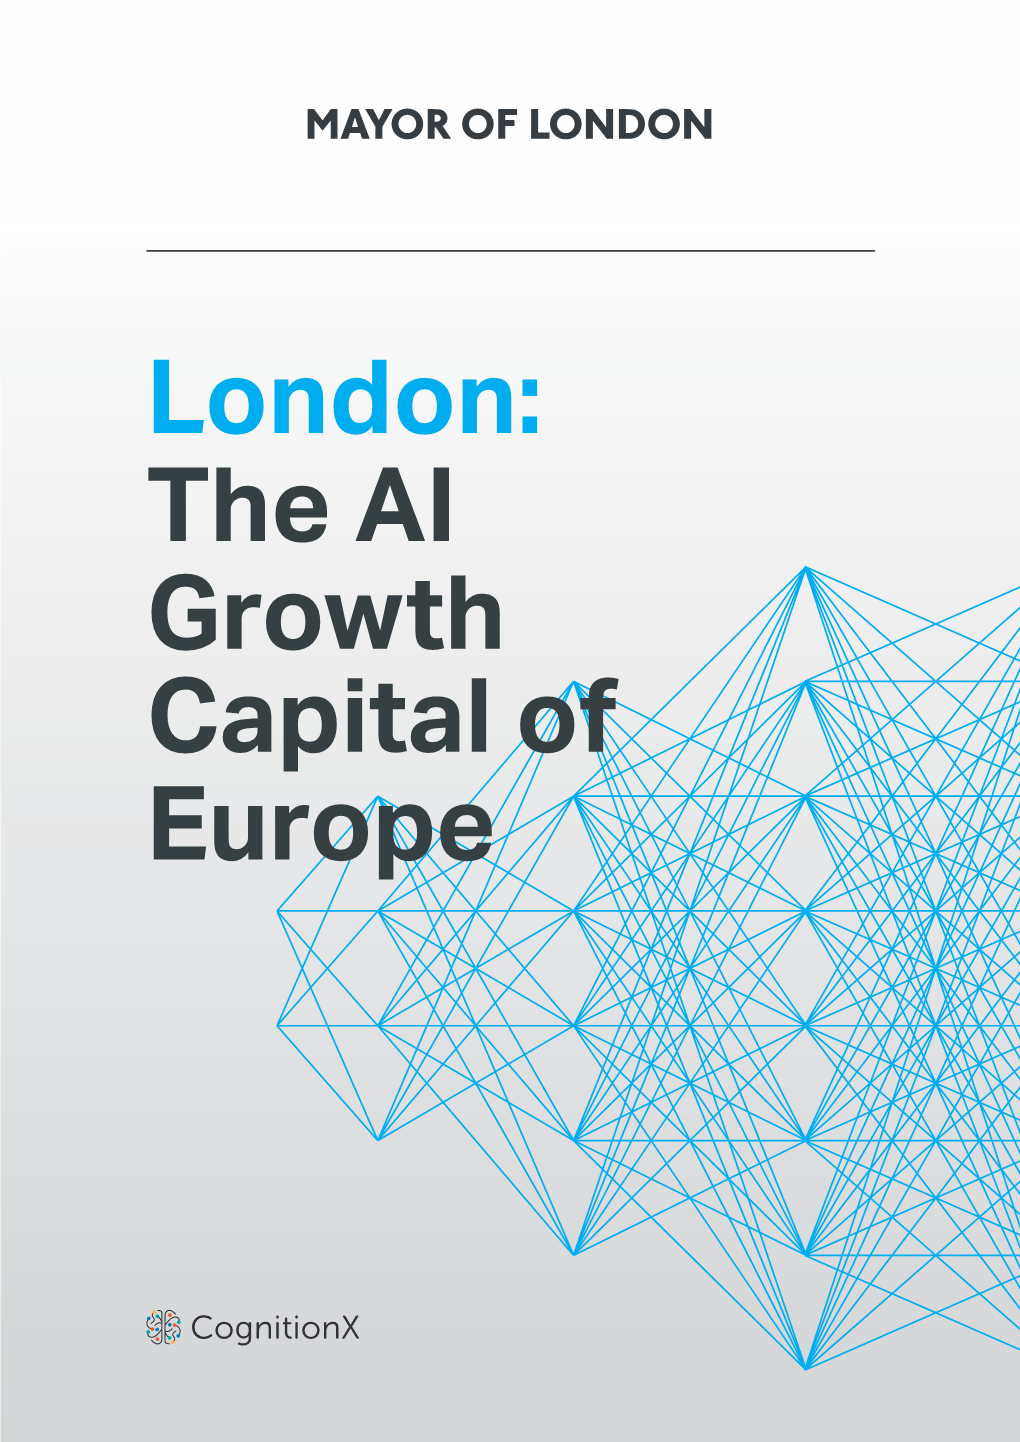 London: the AI Growth Capital of Europe 2 London: the AI Growth Capital of Europe London: the AI Growth Capital of Europe 3